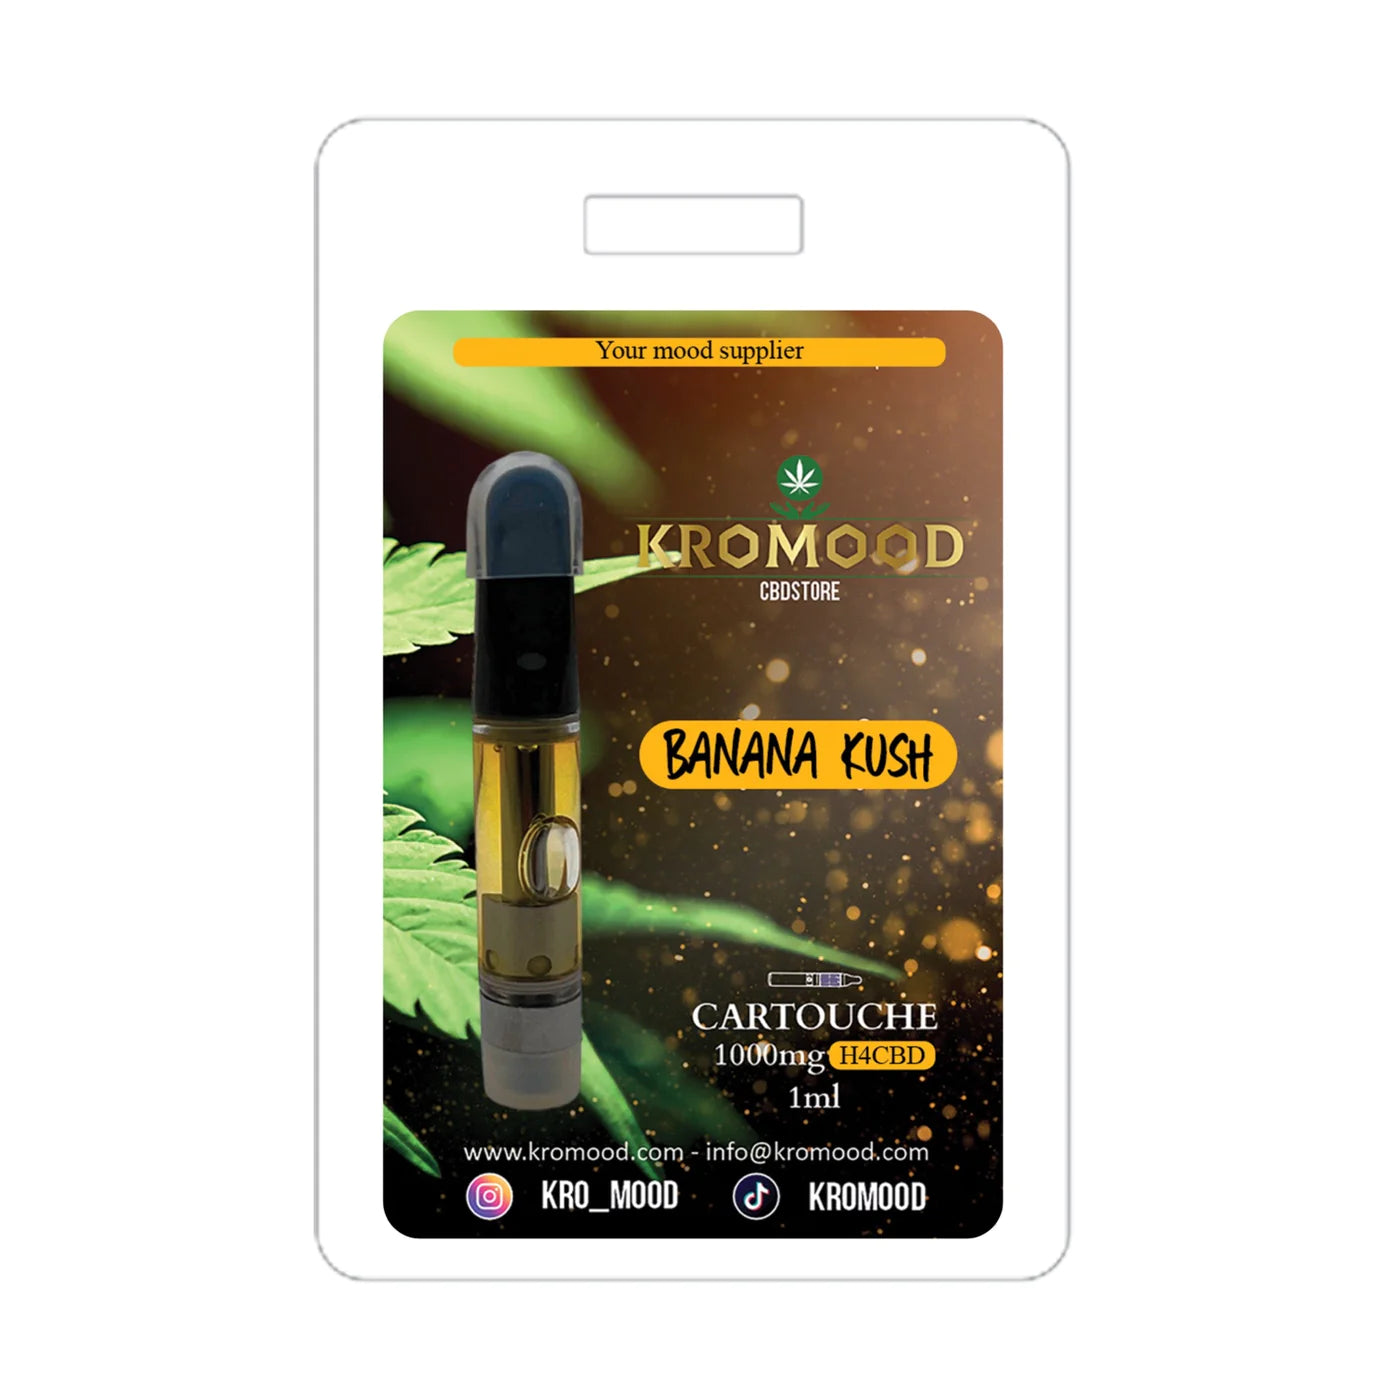 KroMood Cartridge (Dab Pen) van H4CBD - BlueBerry - 1ML - 600 trekjes